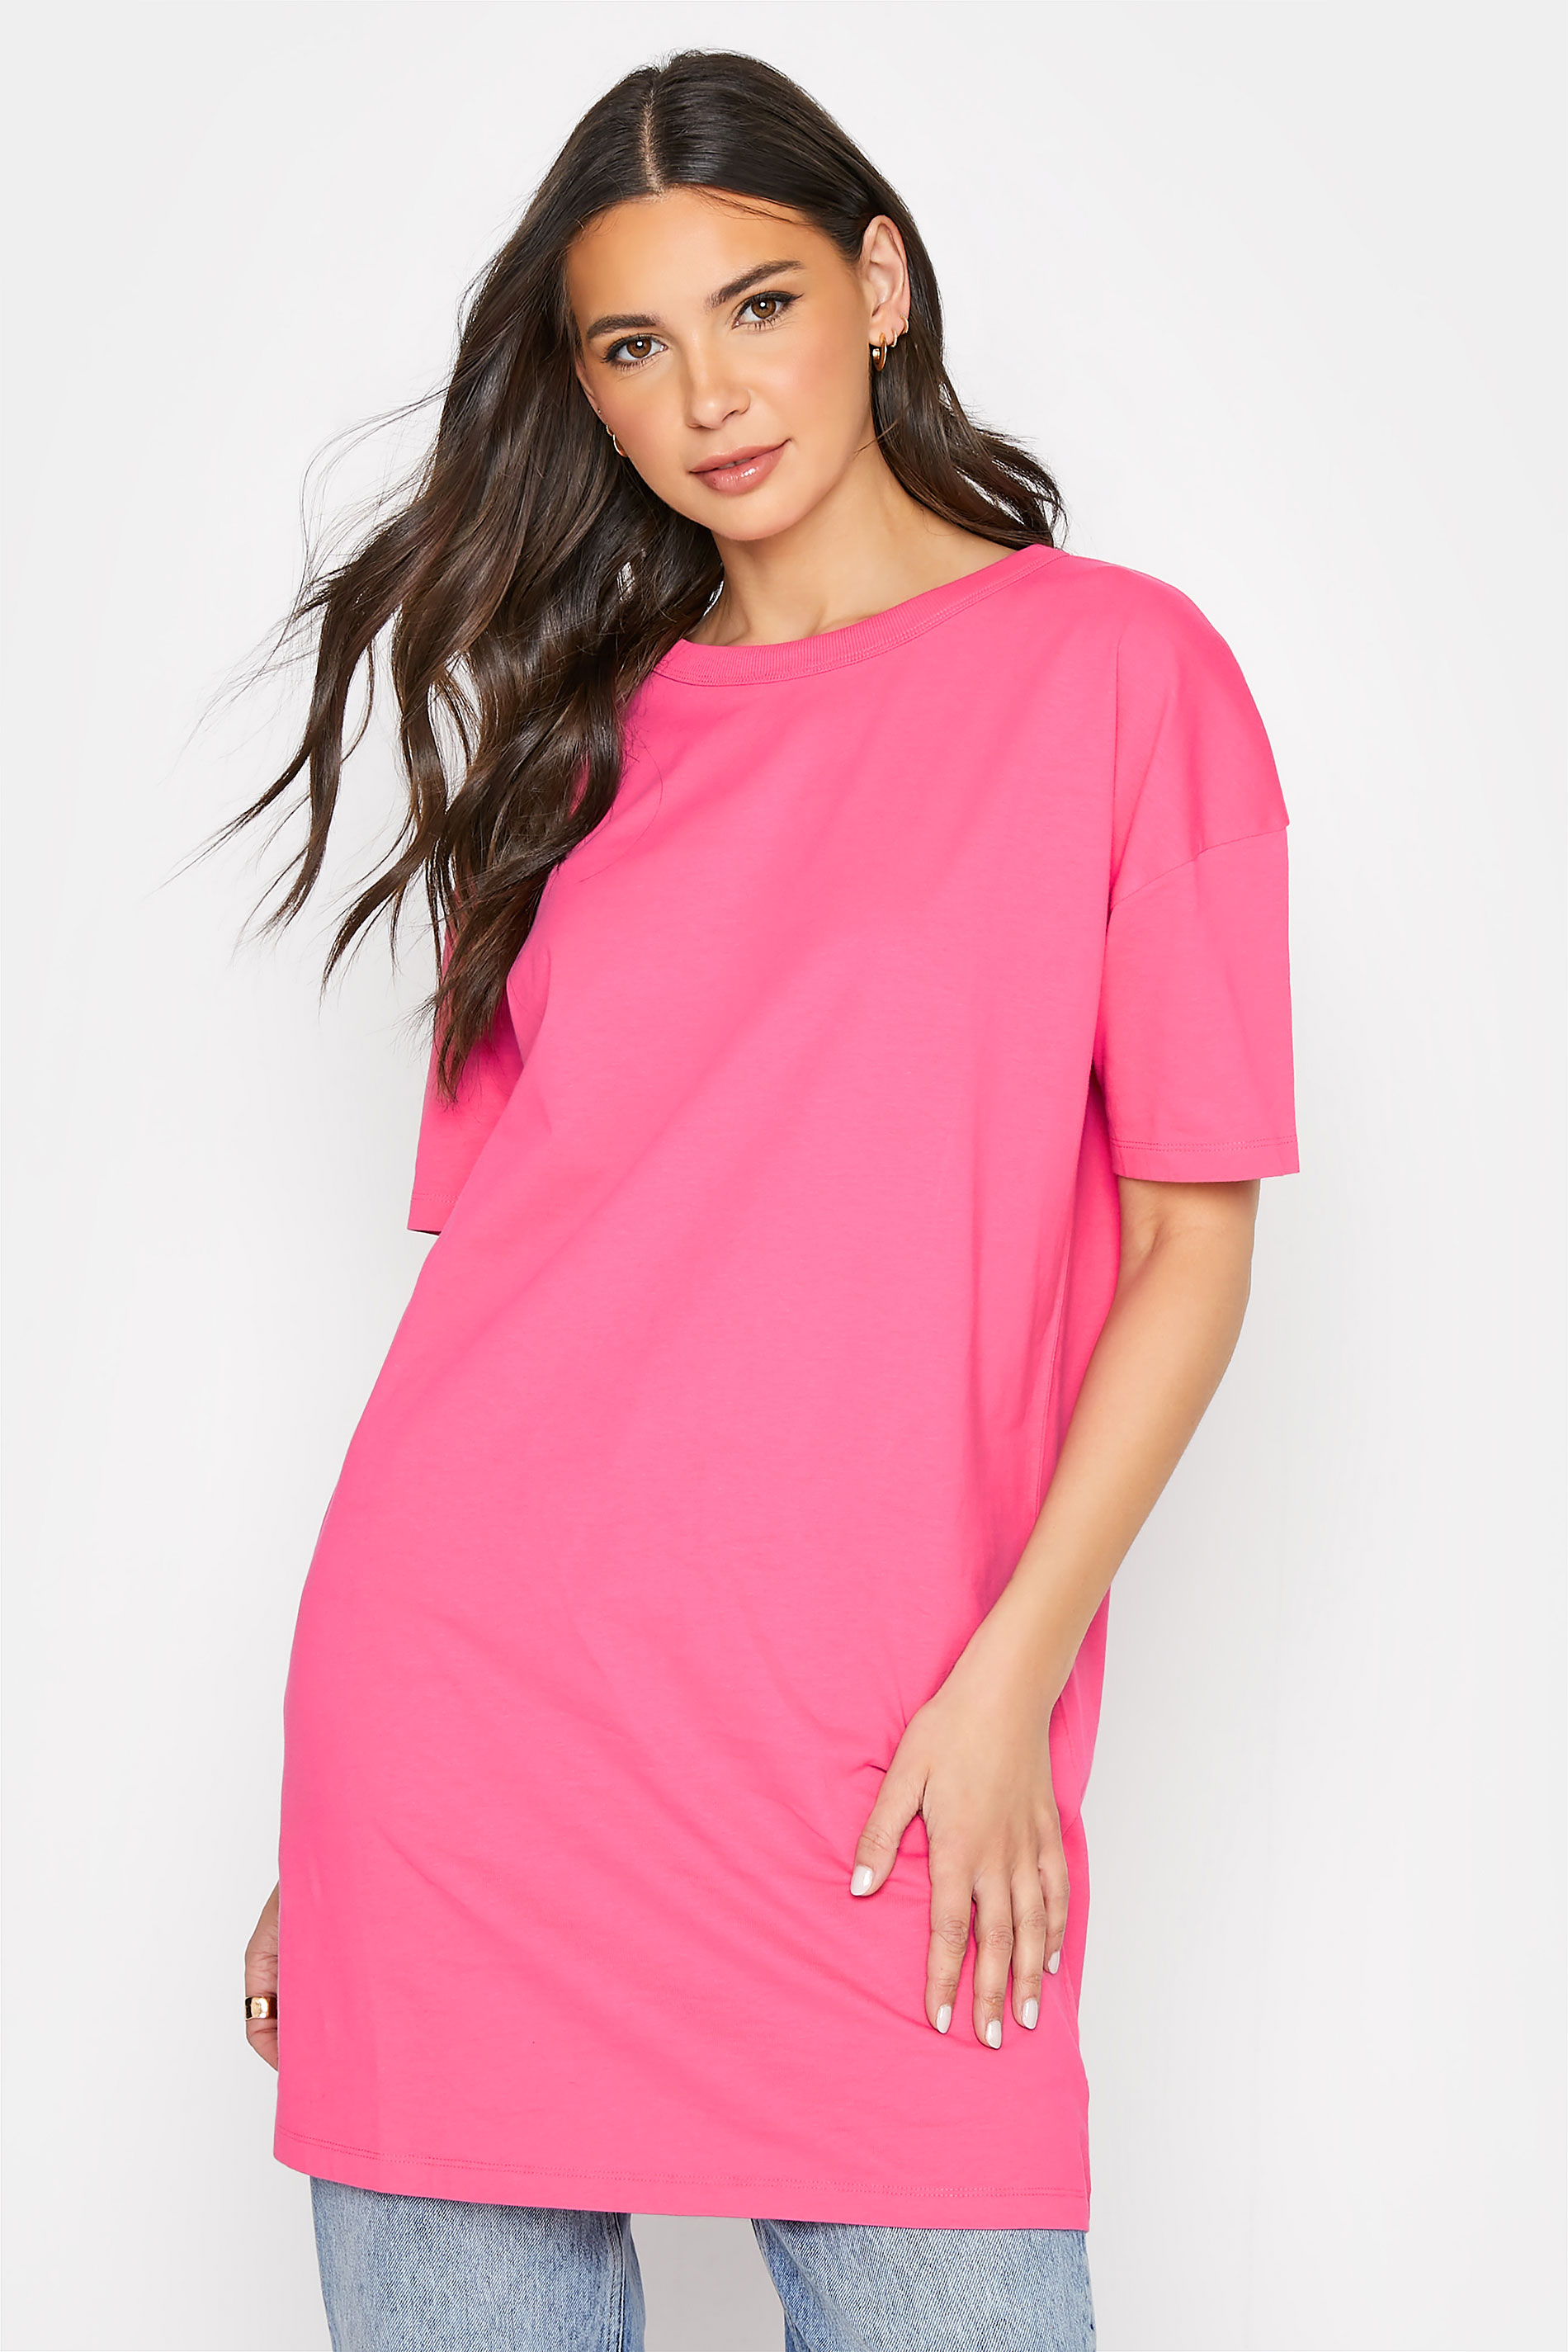 LTS Tall Women's Bright Pink Oversized Tunic T-Shirt | Long Tall Sally 1